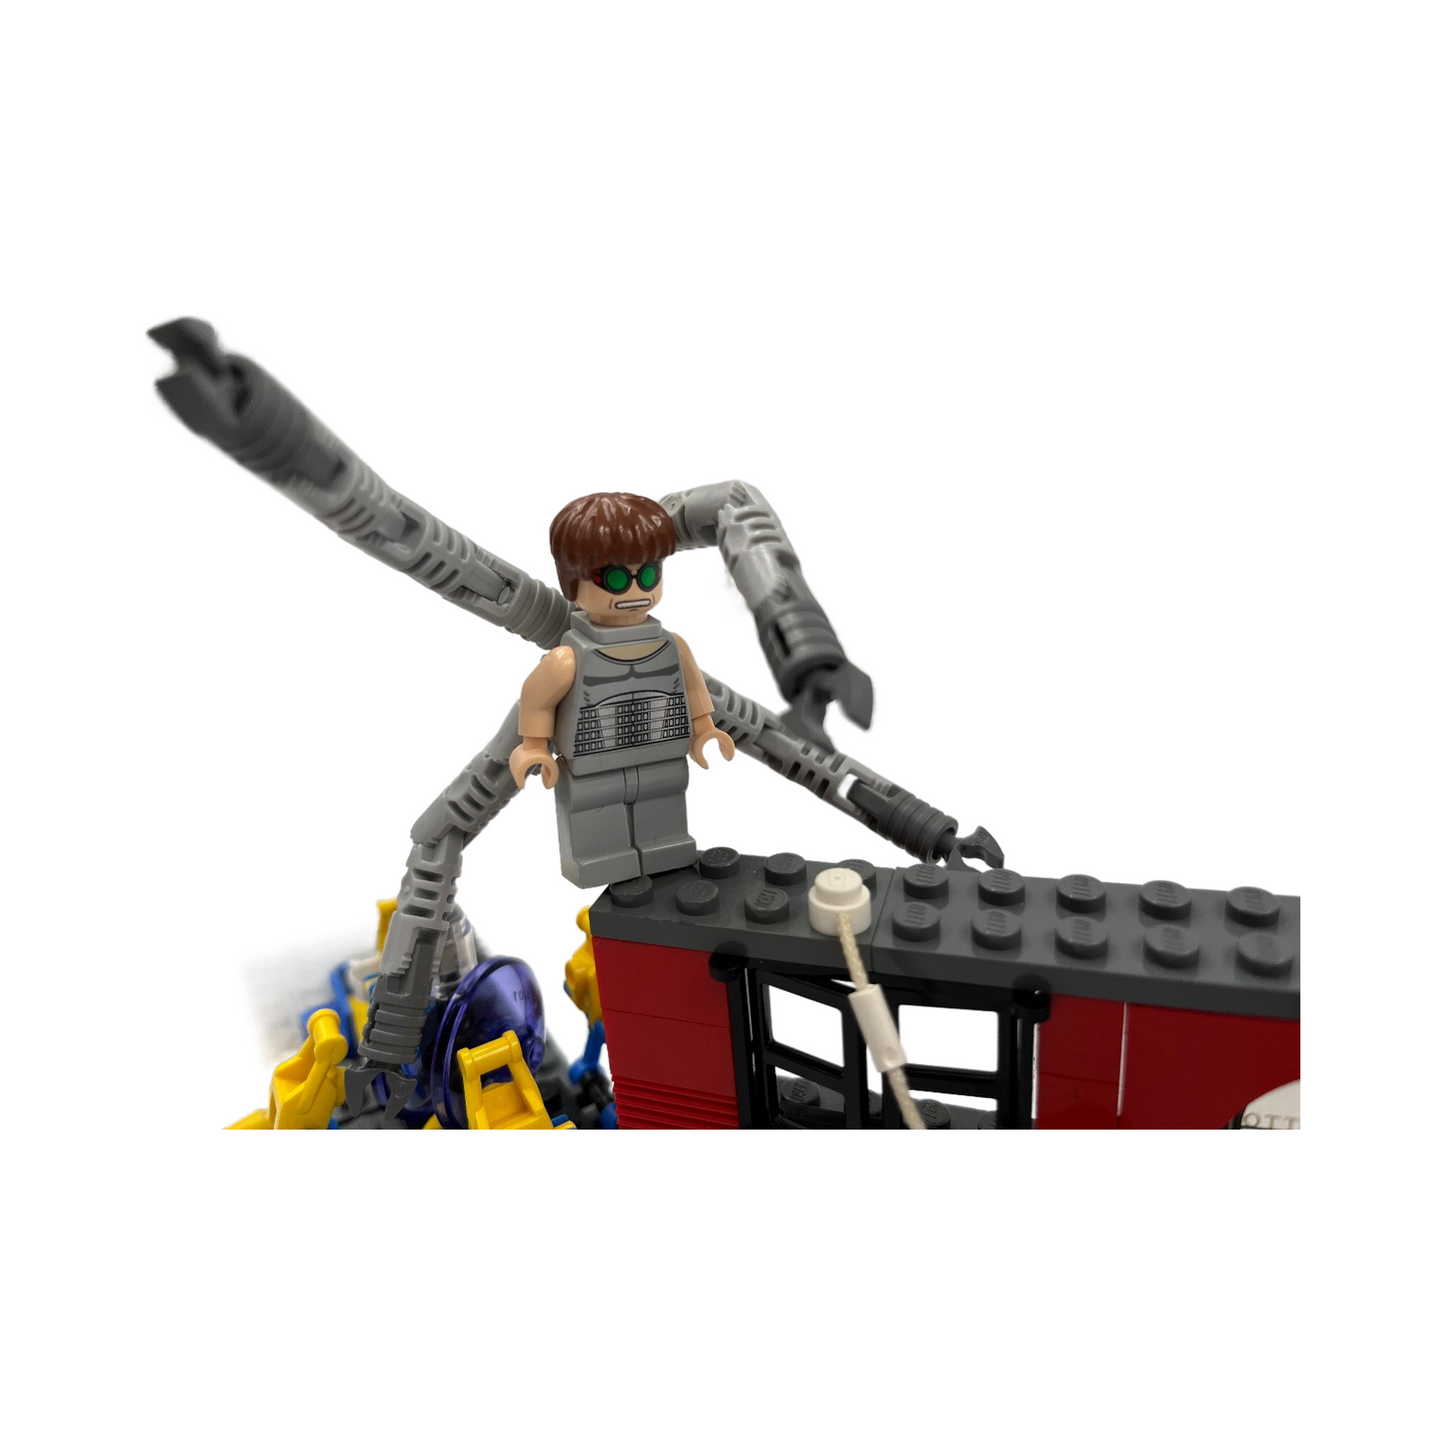 LEGO® Spider-Man 4857 Doc Ocks Fusionslabor mit BA/Figuren ohne OVP